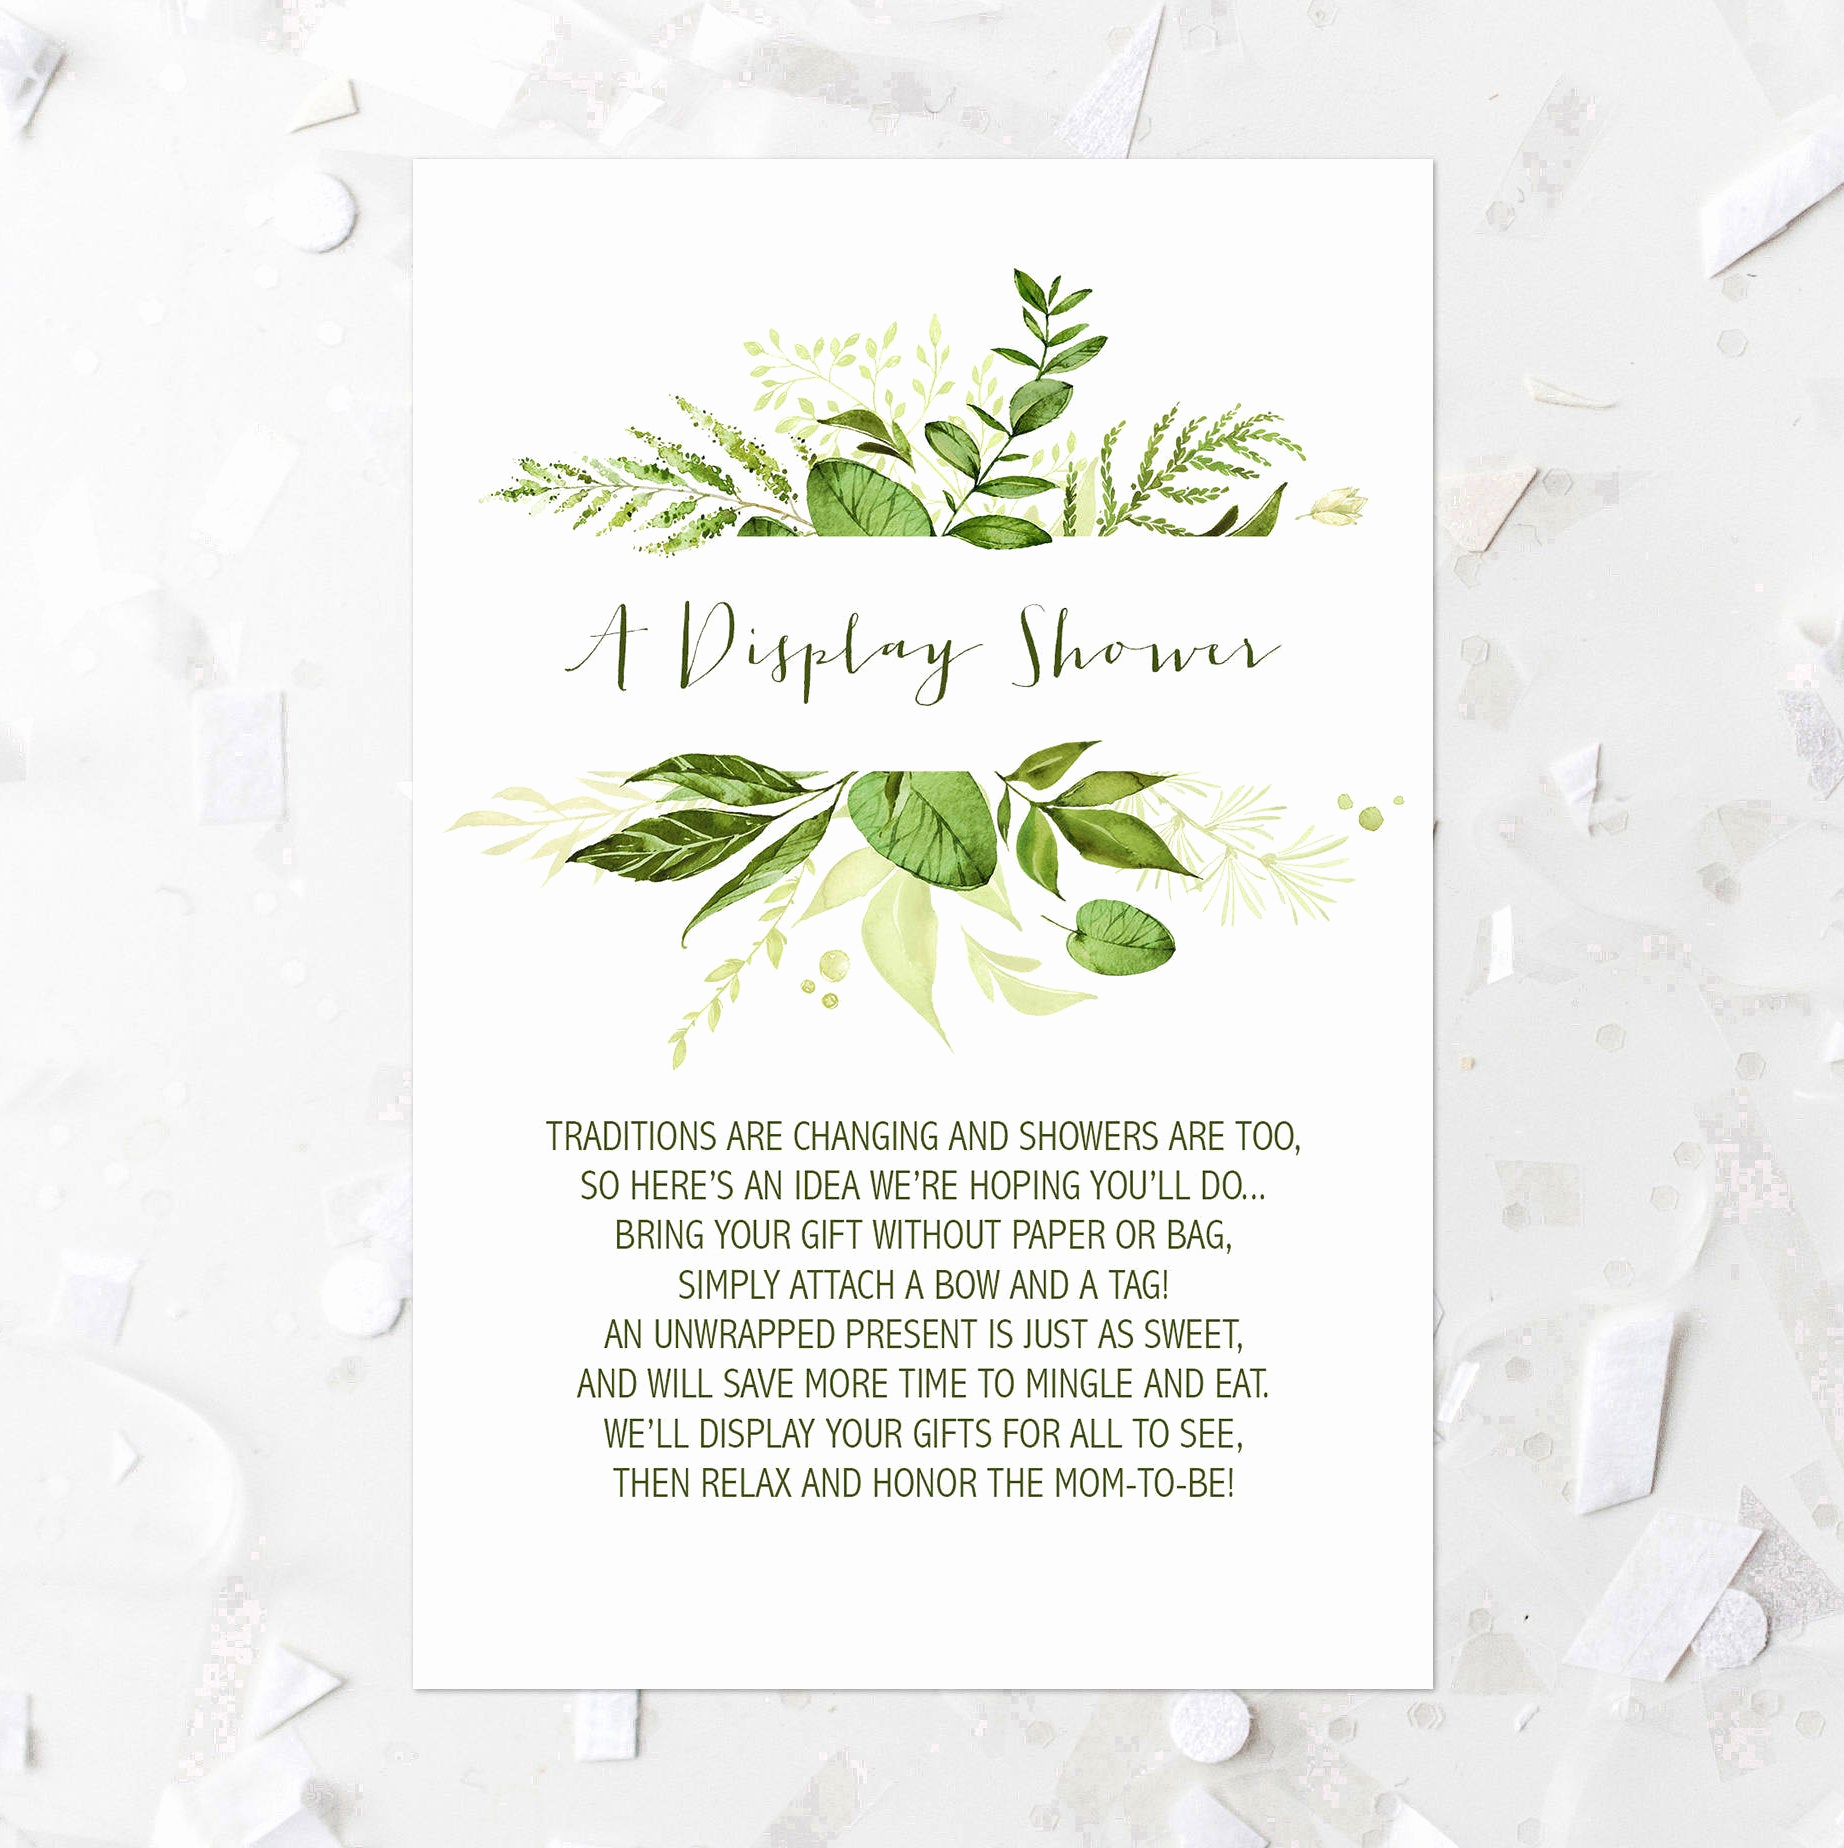 Display Shower Invitation Wording Elegant Greenery Display Shower Card Printable Leafy Green Baby Shower